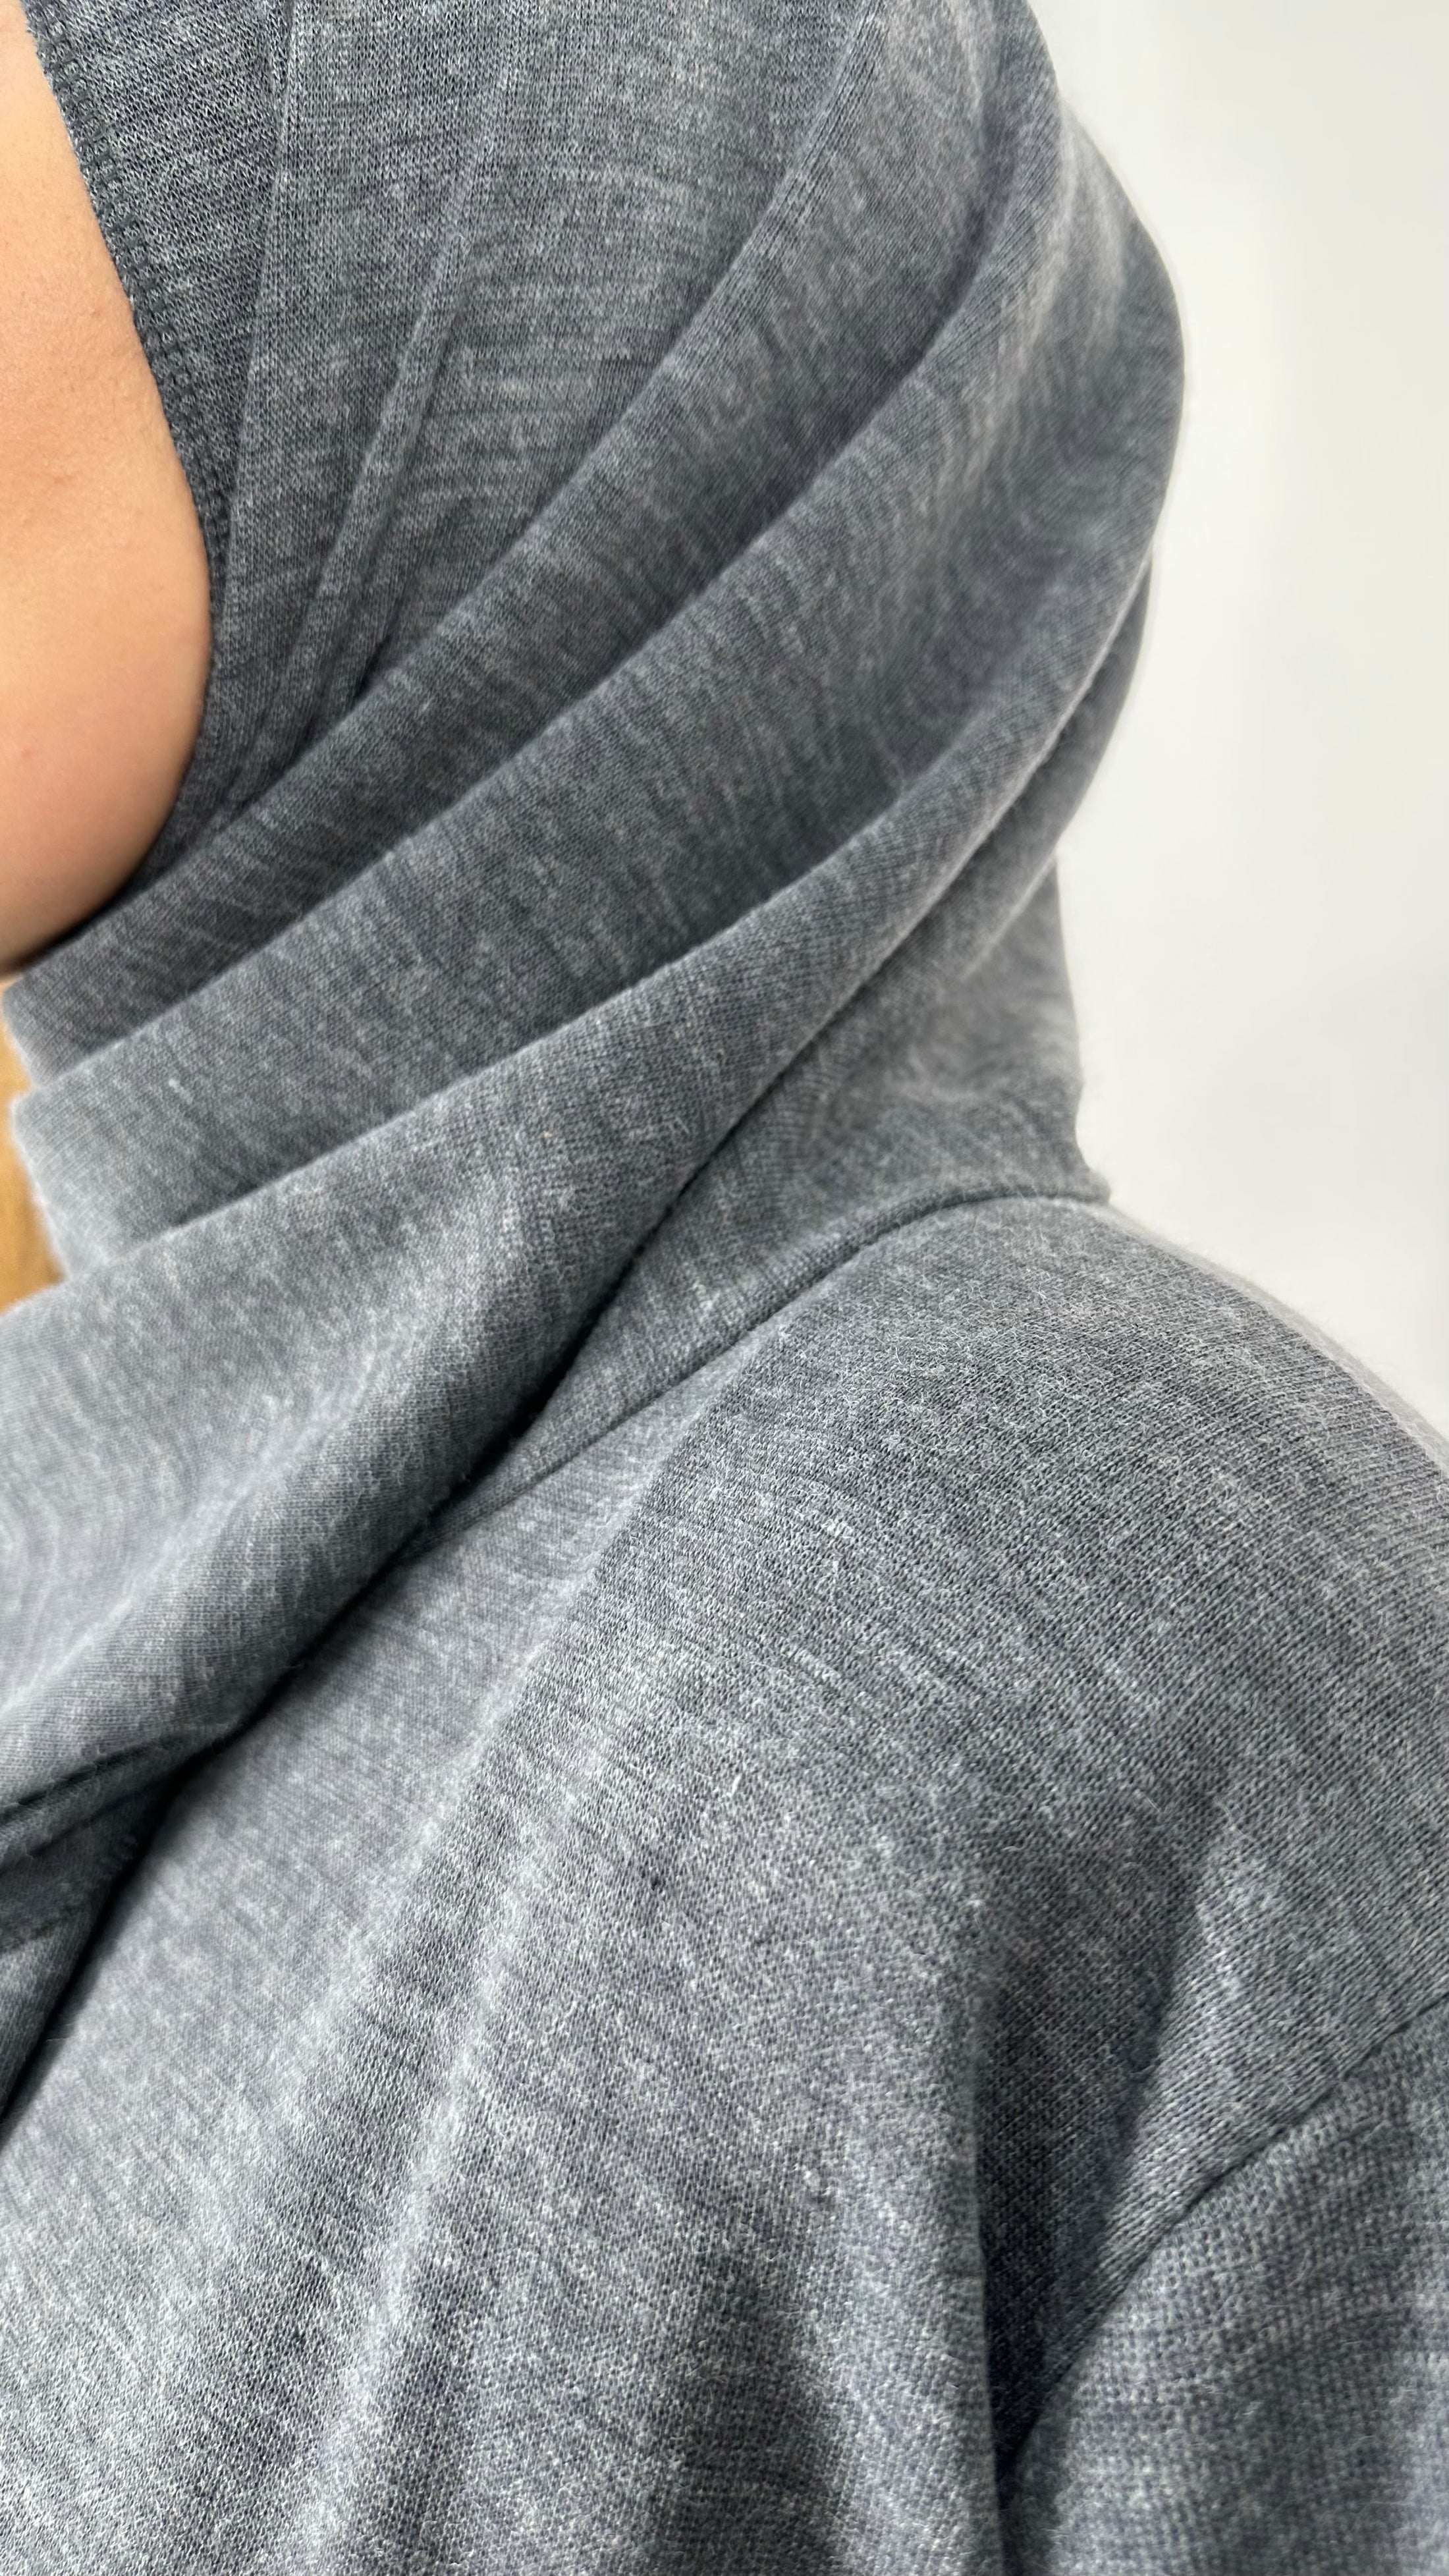 Abaya ensemble invernale - Hijab paradise - invernale - hijab attaccato alla abaya - abito da preghiera comodo - caldo - Hijab - donna musulmana 